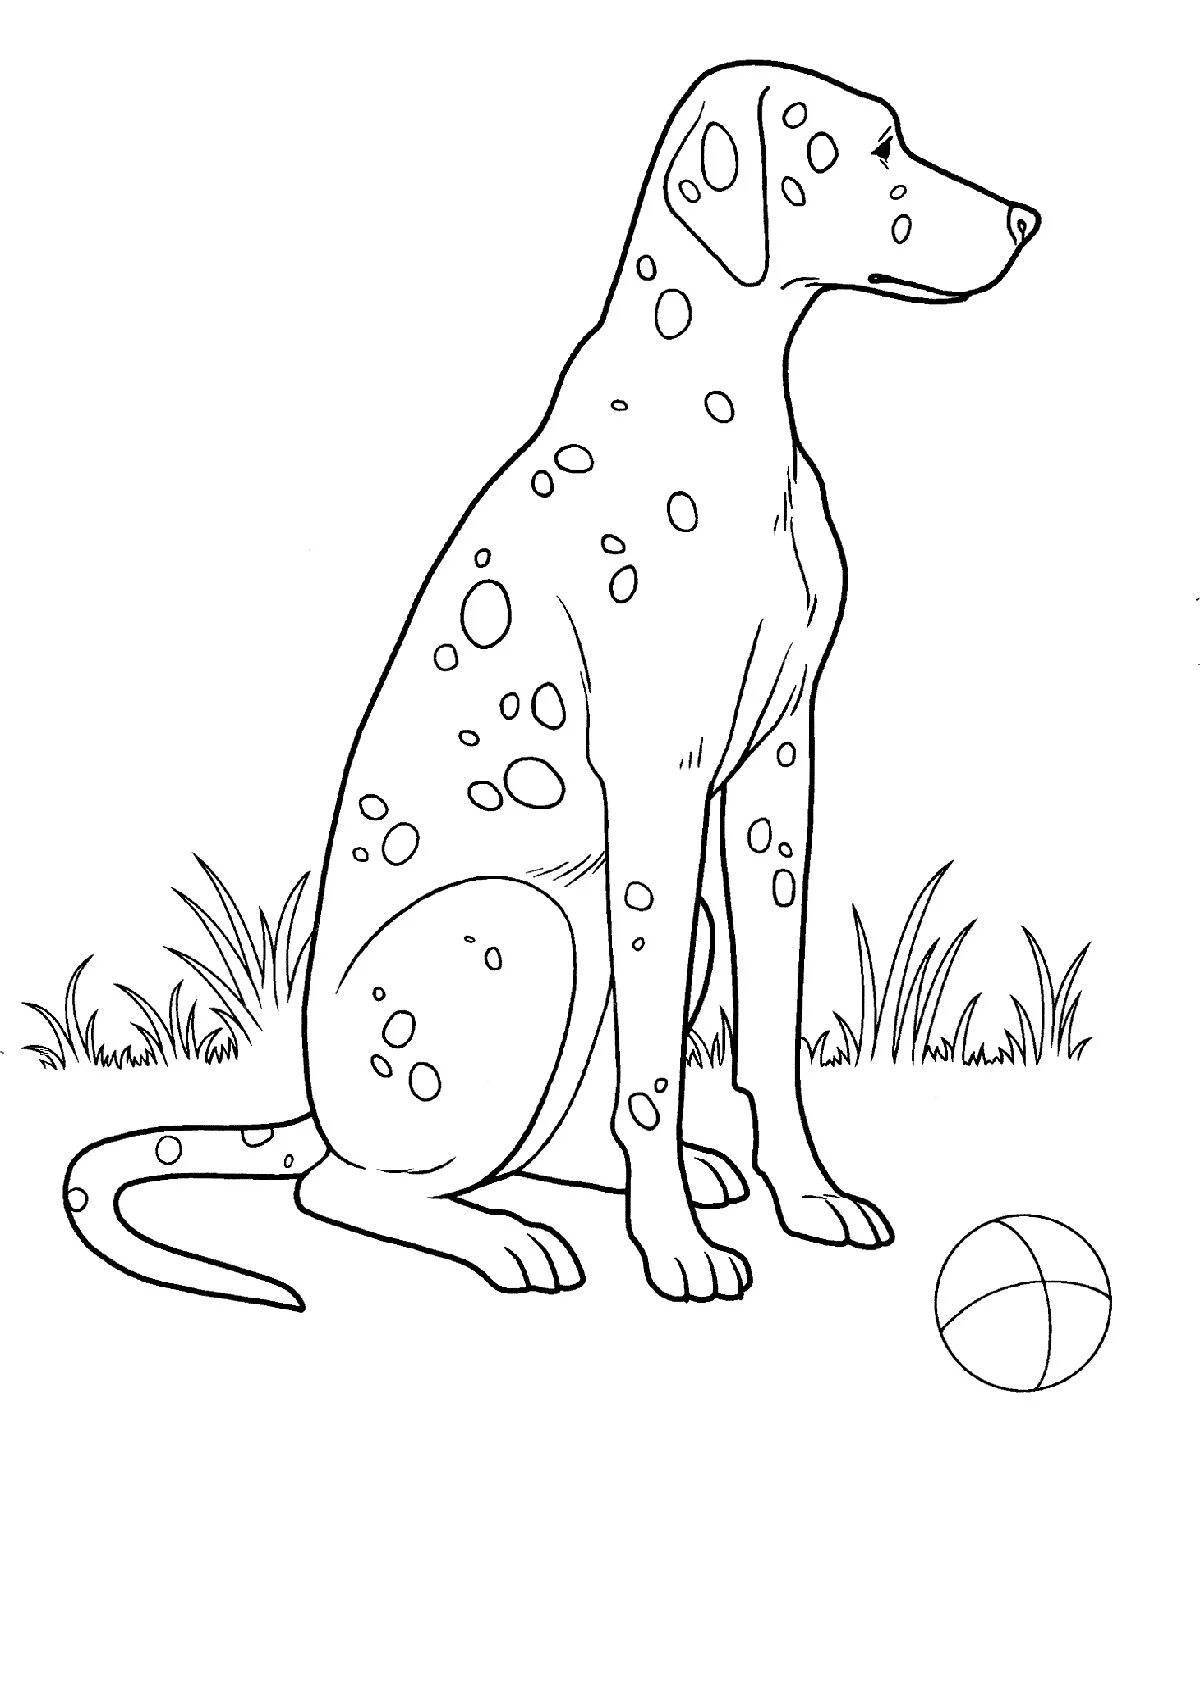 Coloring page joyful dalmatian dog